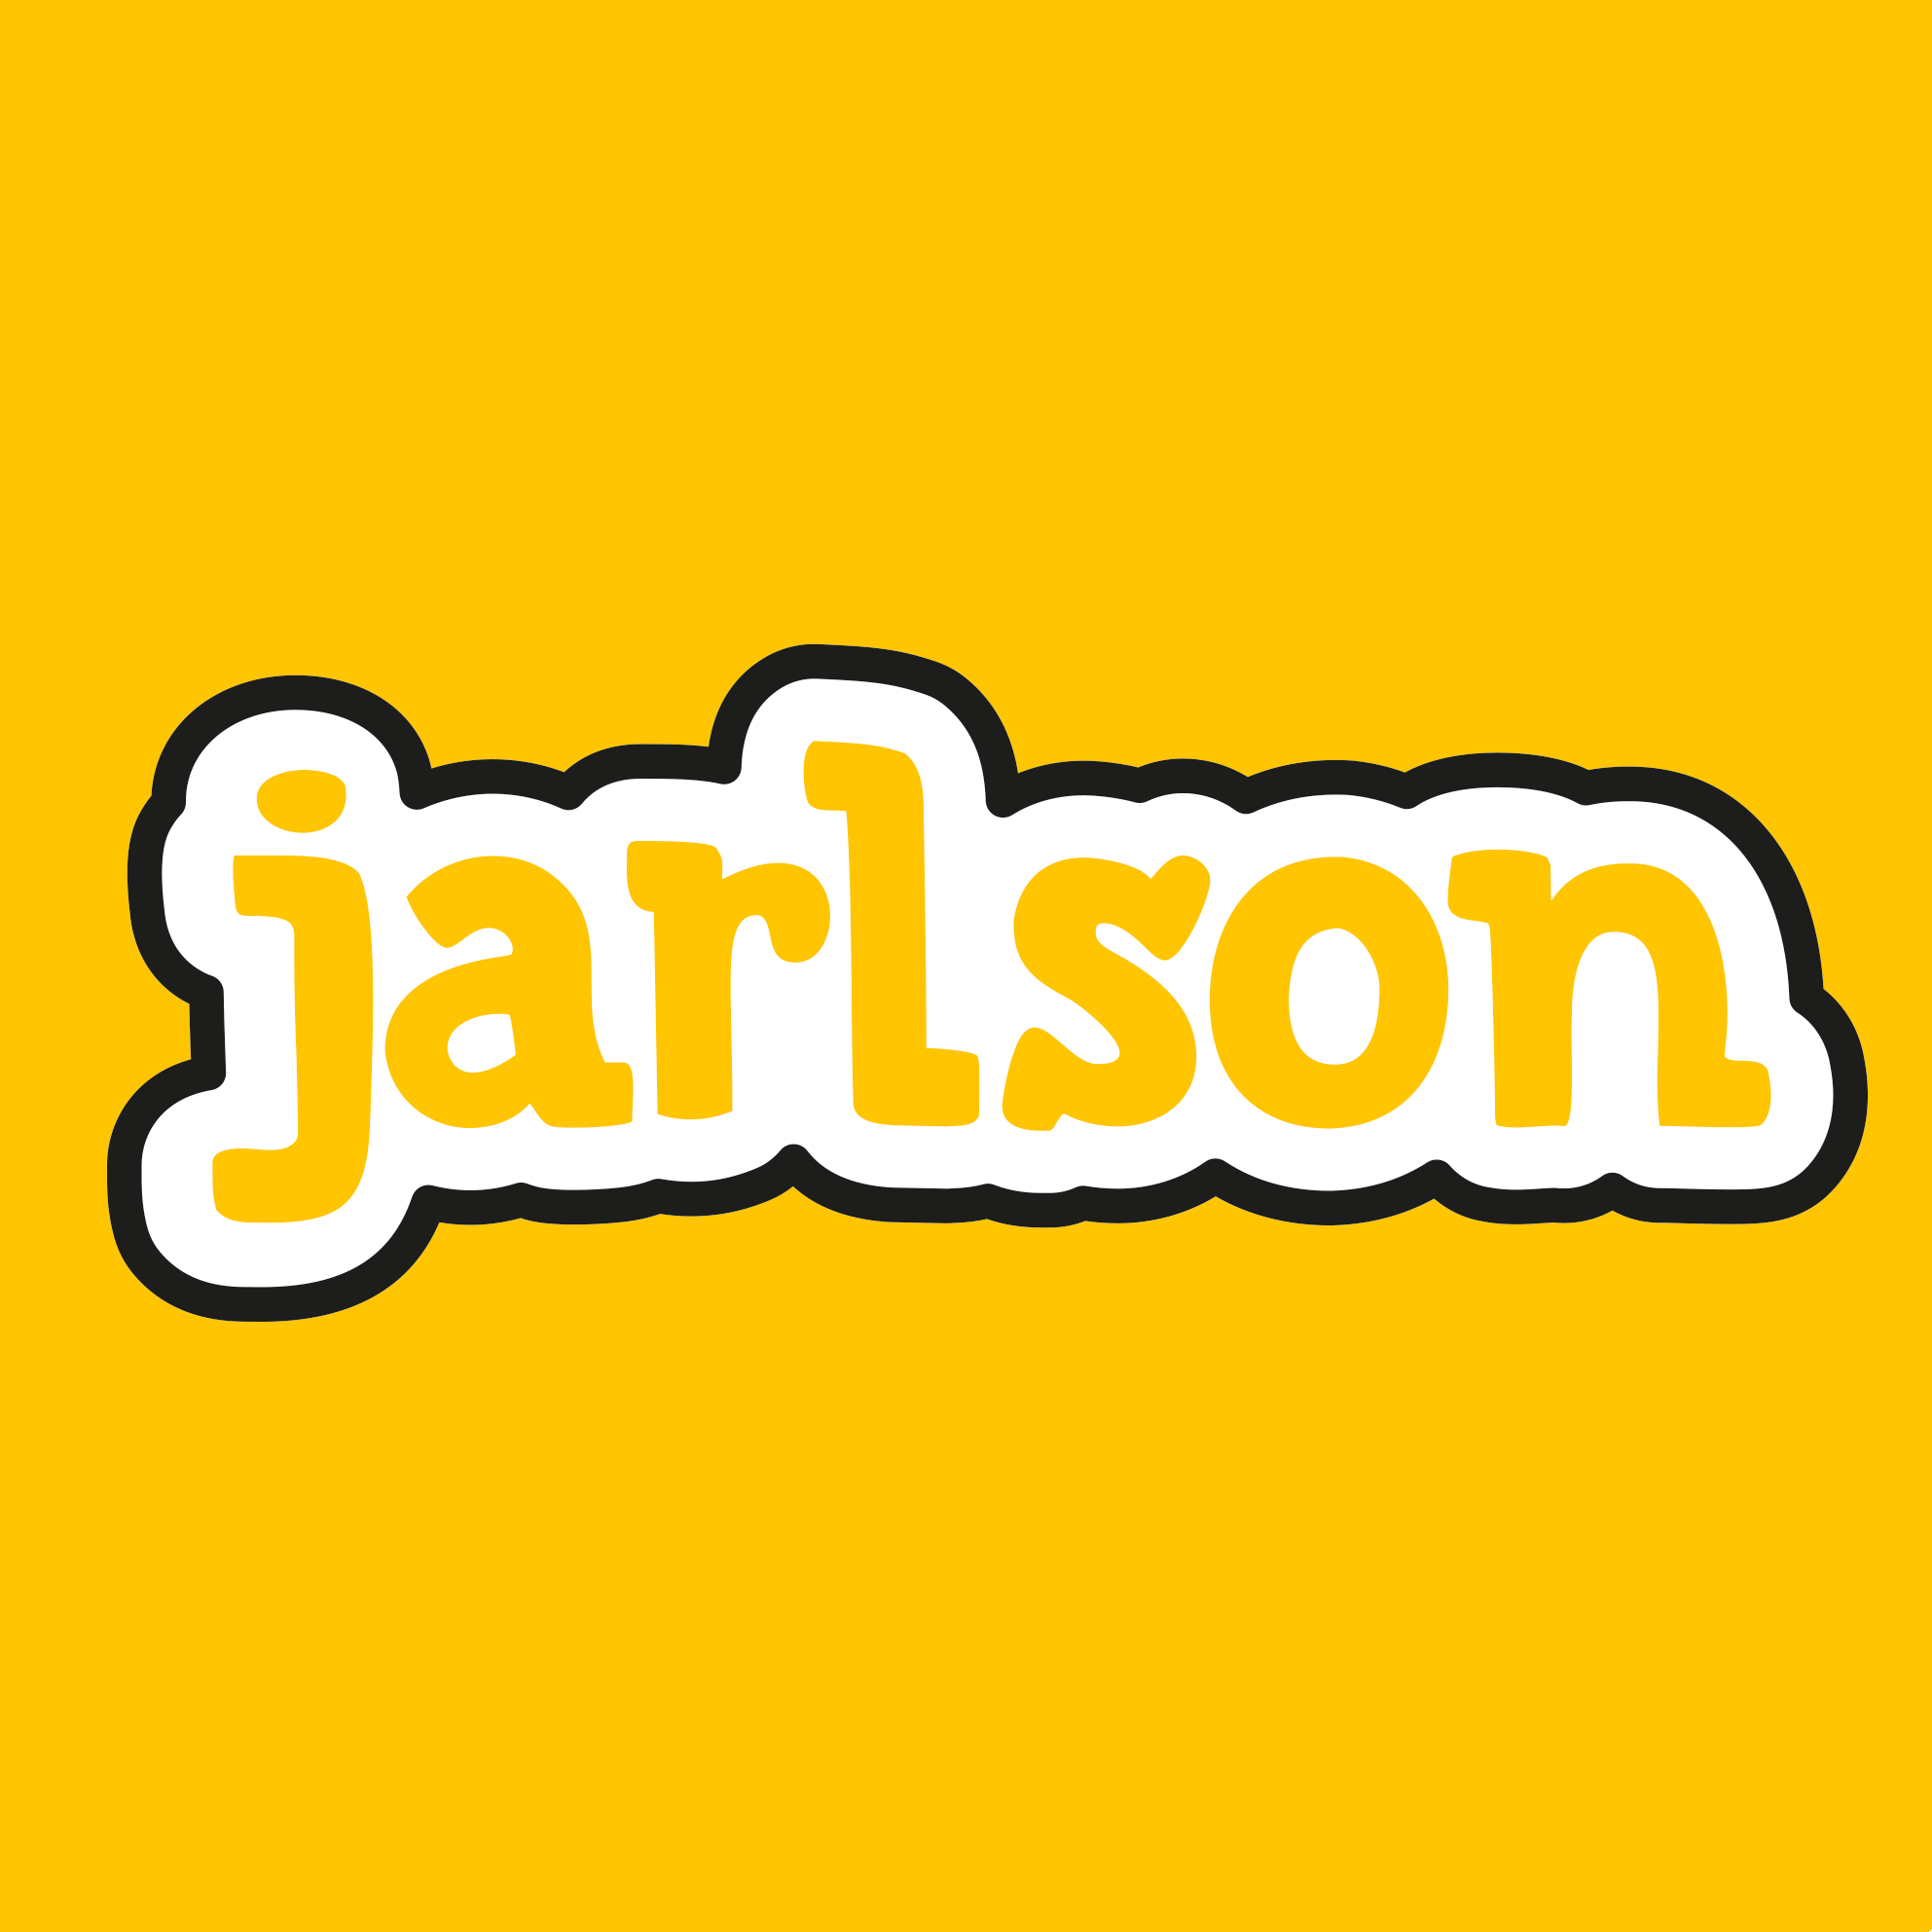 JARLSON Bottle